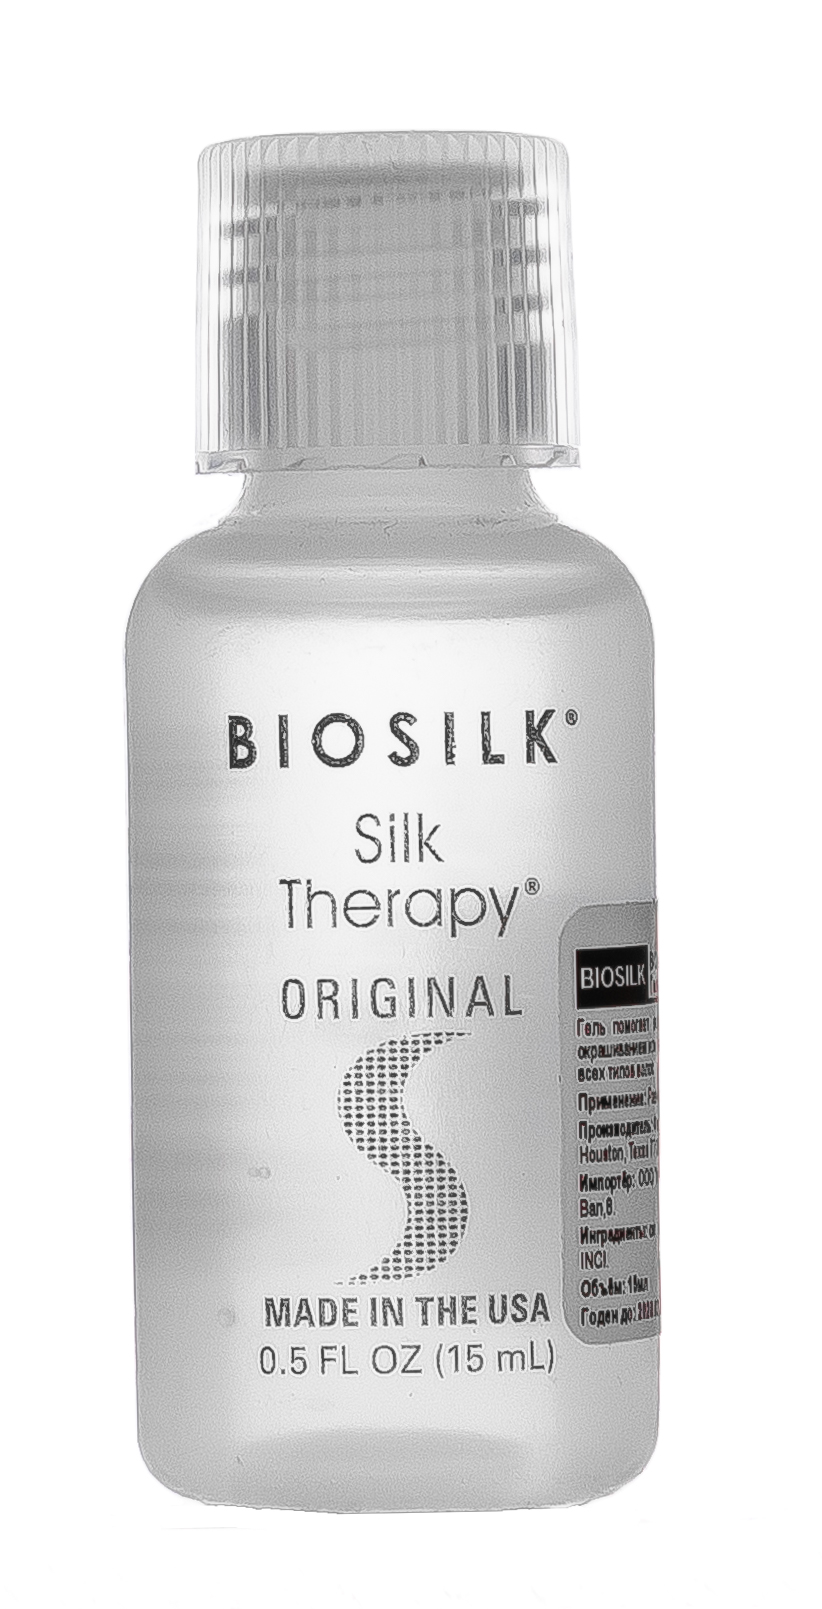 Гель для волос Biosilk Silk Therapy Original увлажняющий 15 мл спрей для волос biosilk